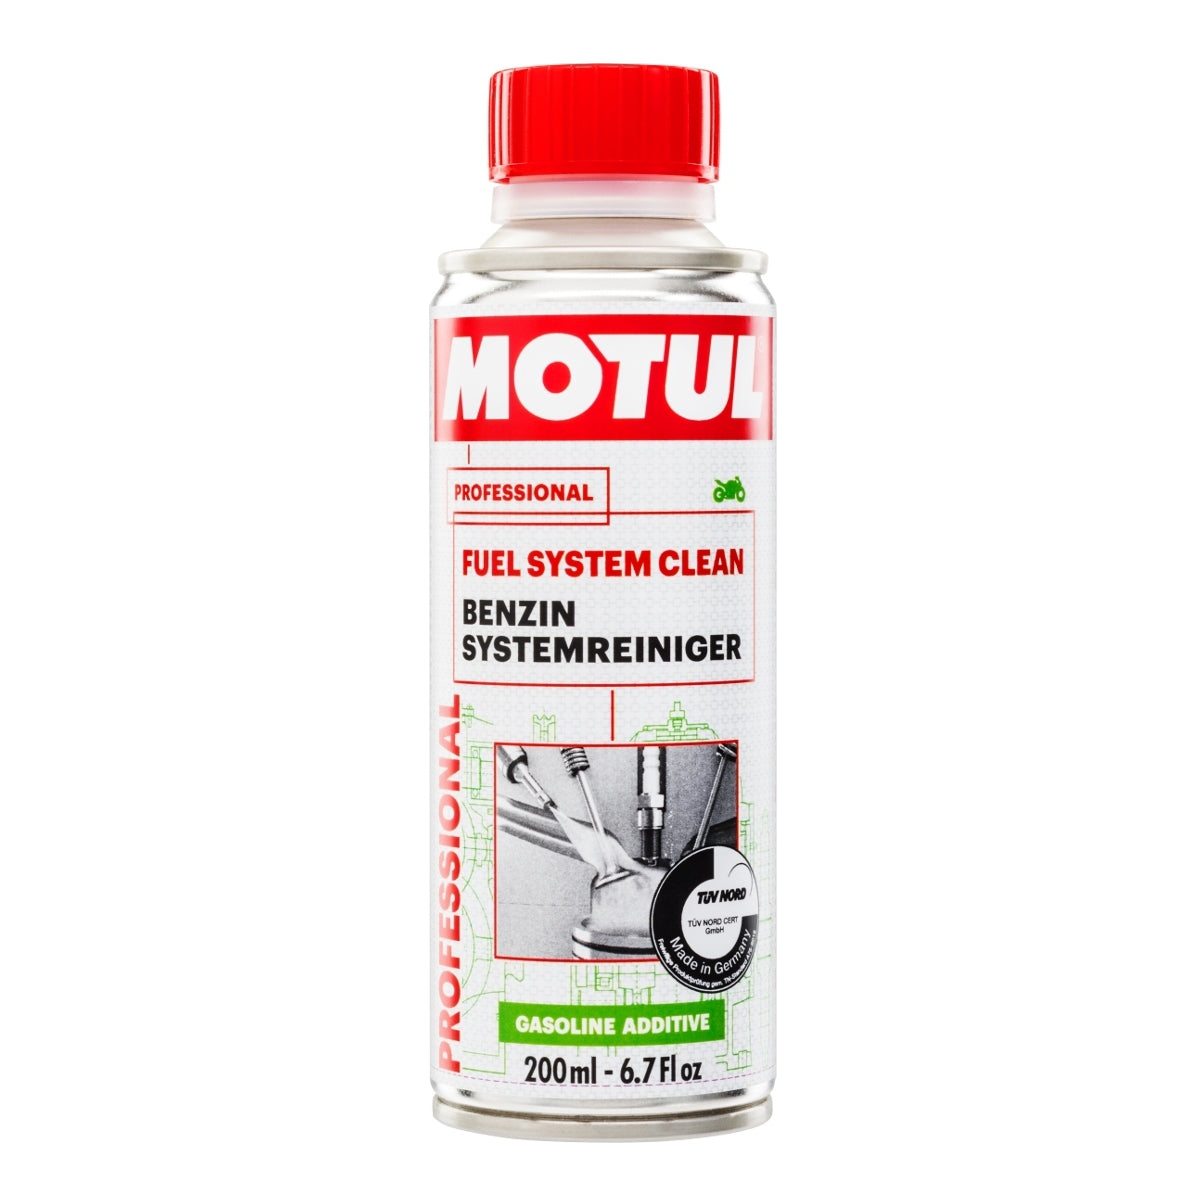 Motul Fuel System Clean Moto Professional